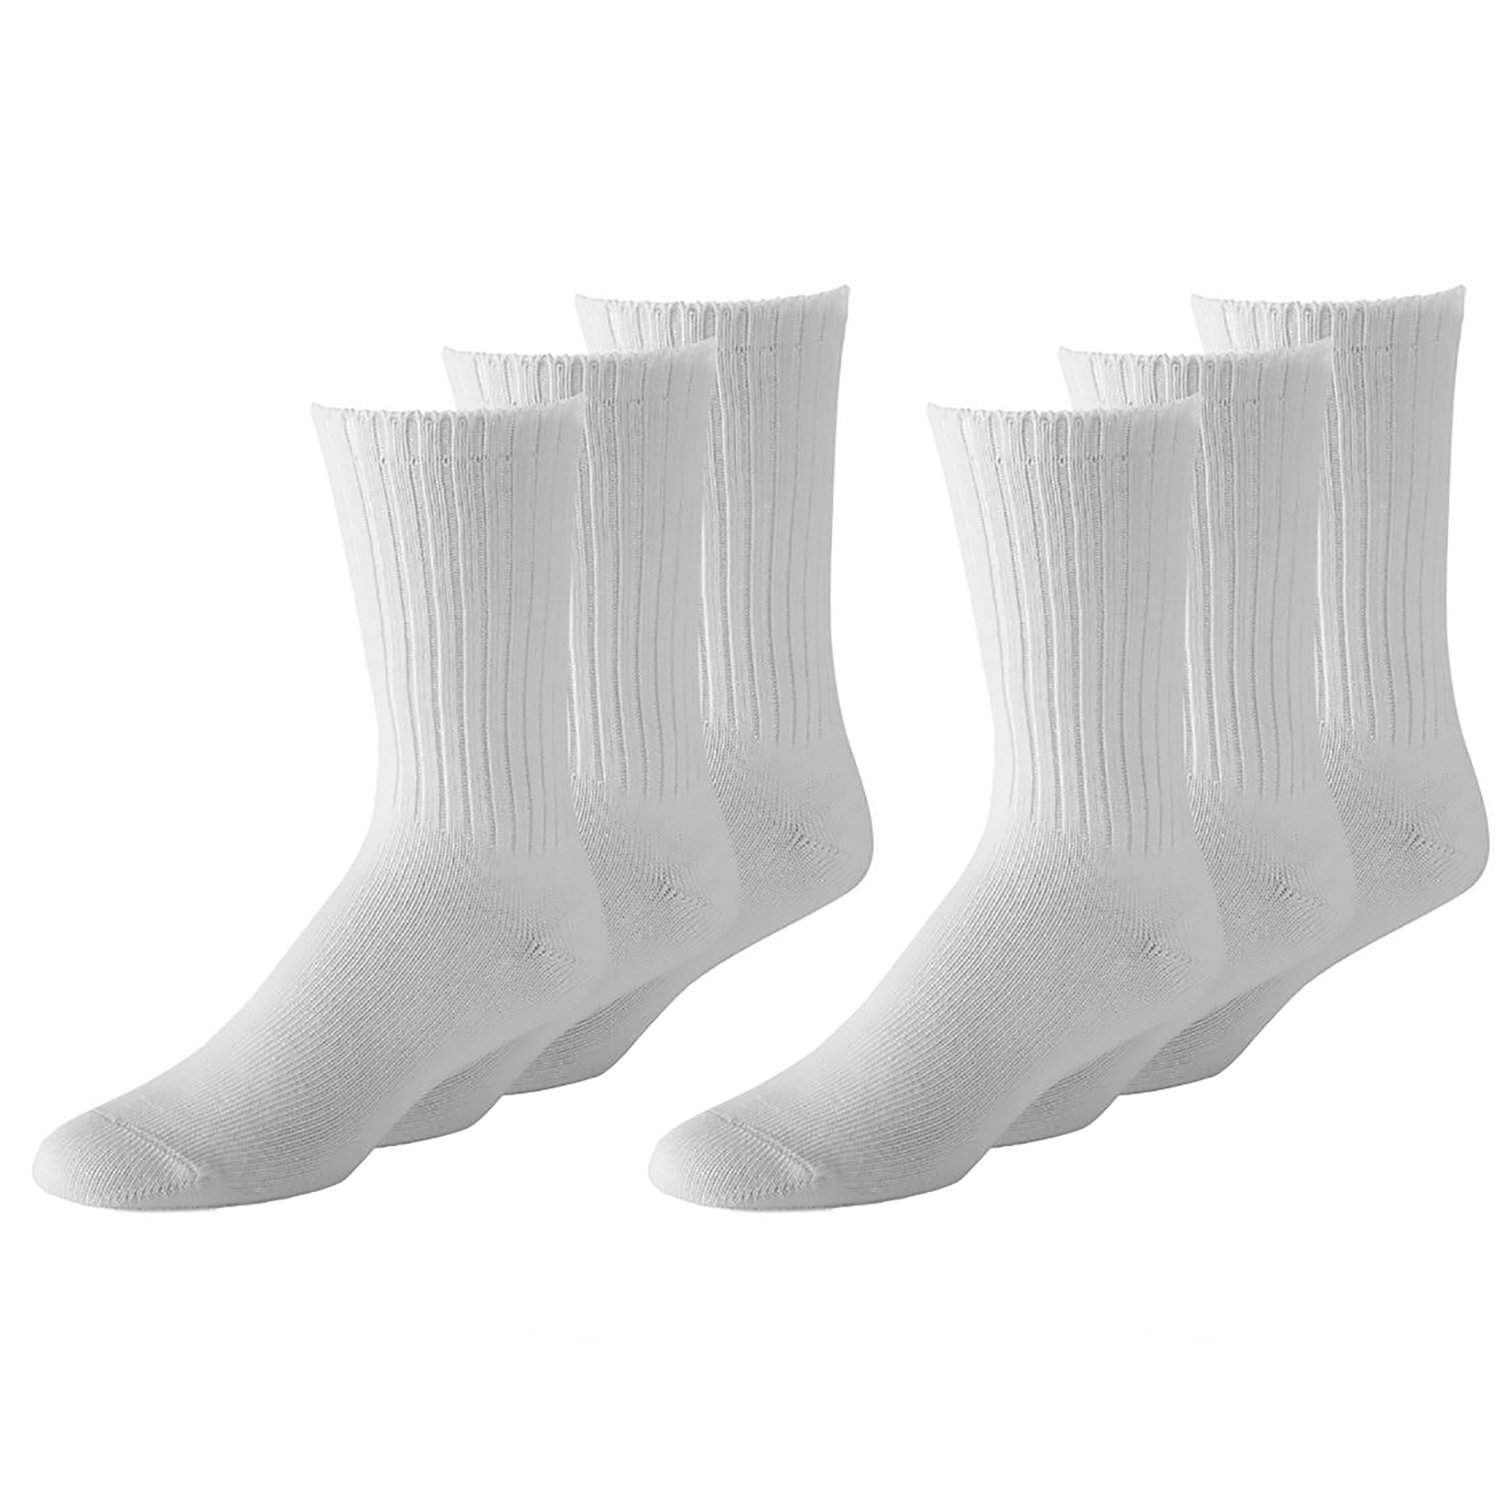 Balec Unisex Crew Athletic Sports Cotton Socks 20 Pack